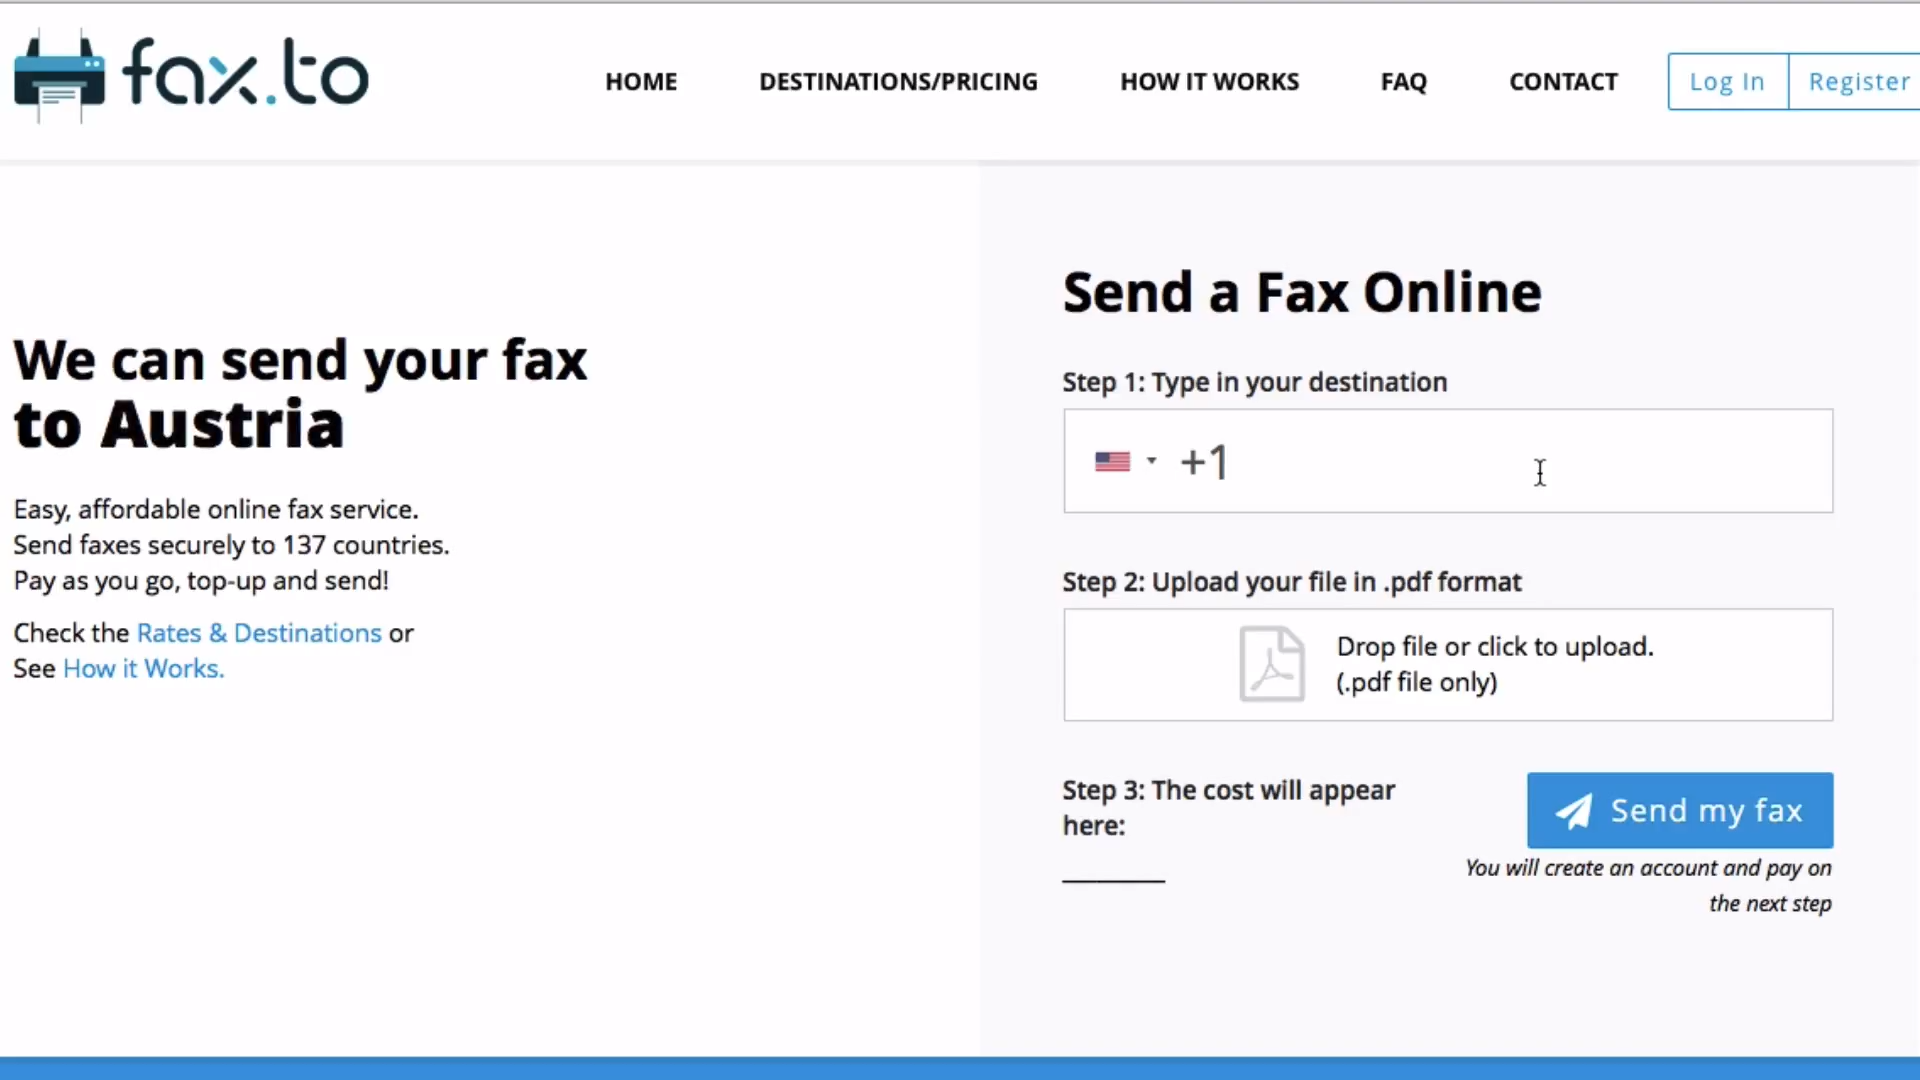 Fax.to fax destination